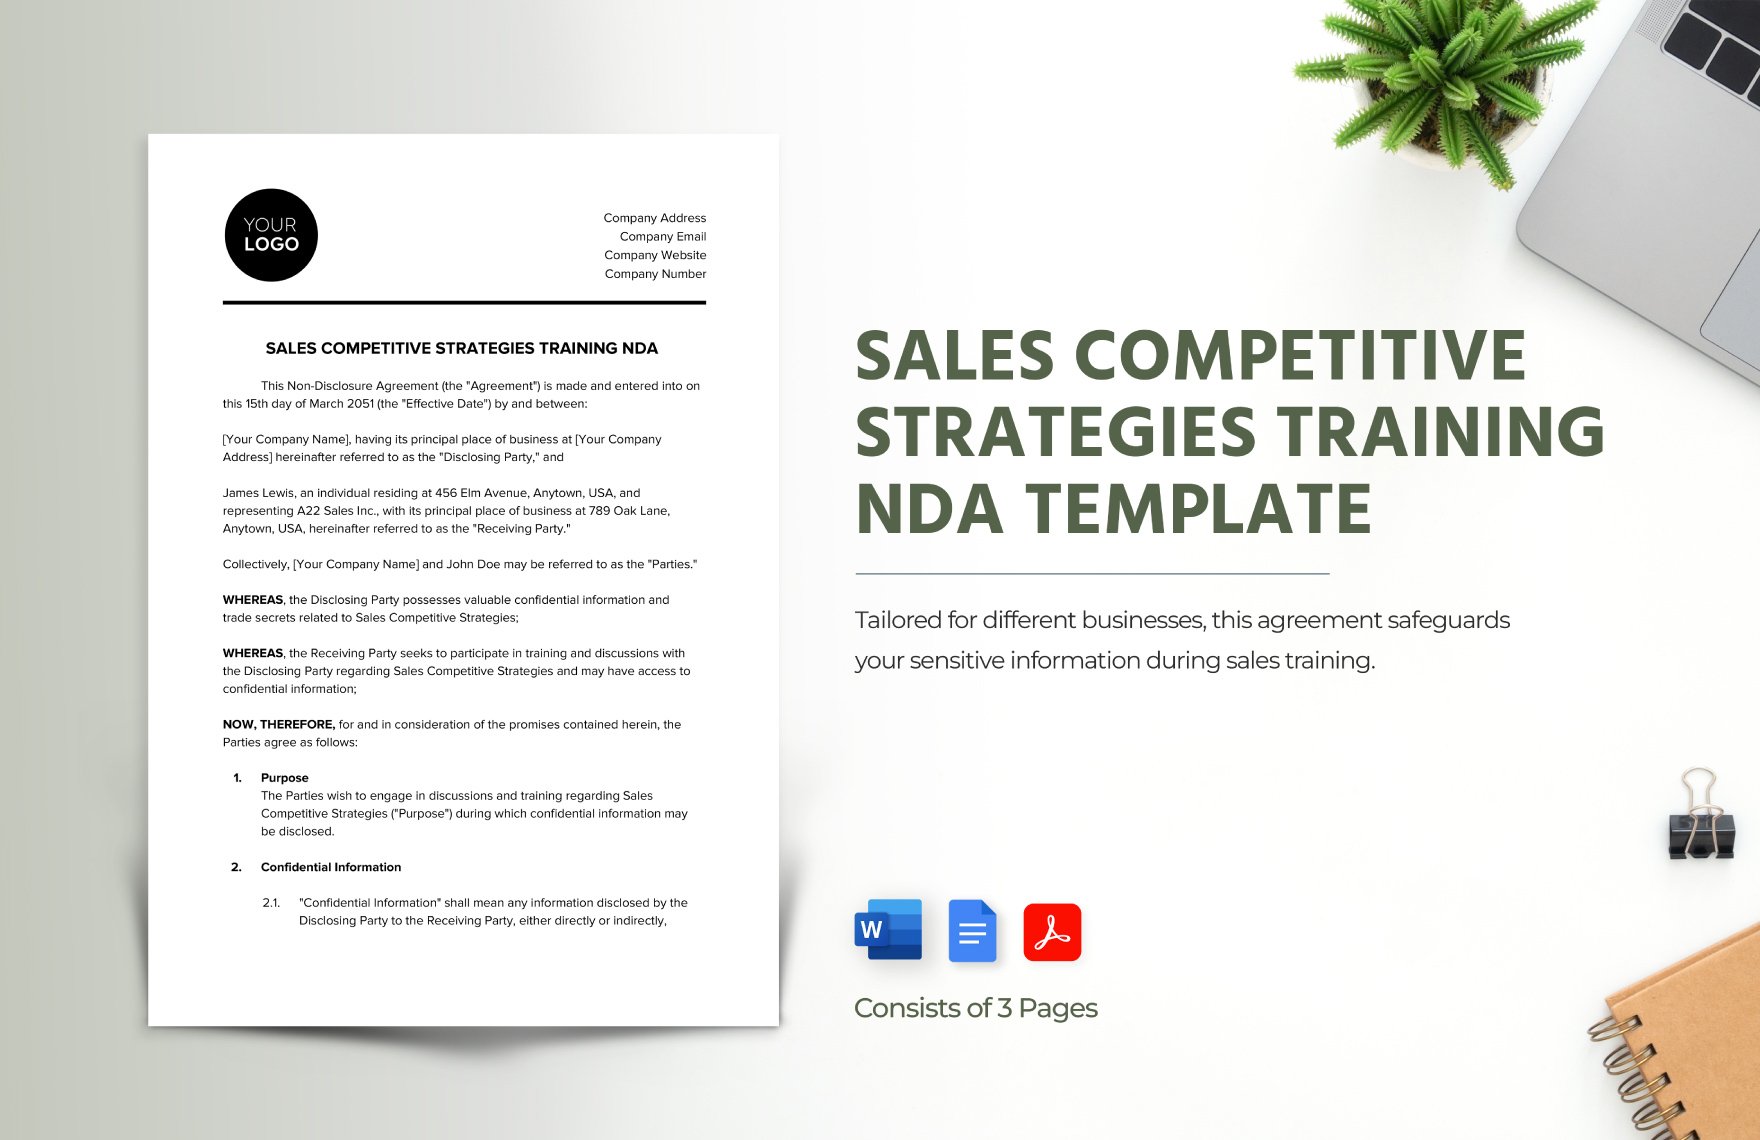 Sales Competitive Strategies Training NDA Template